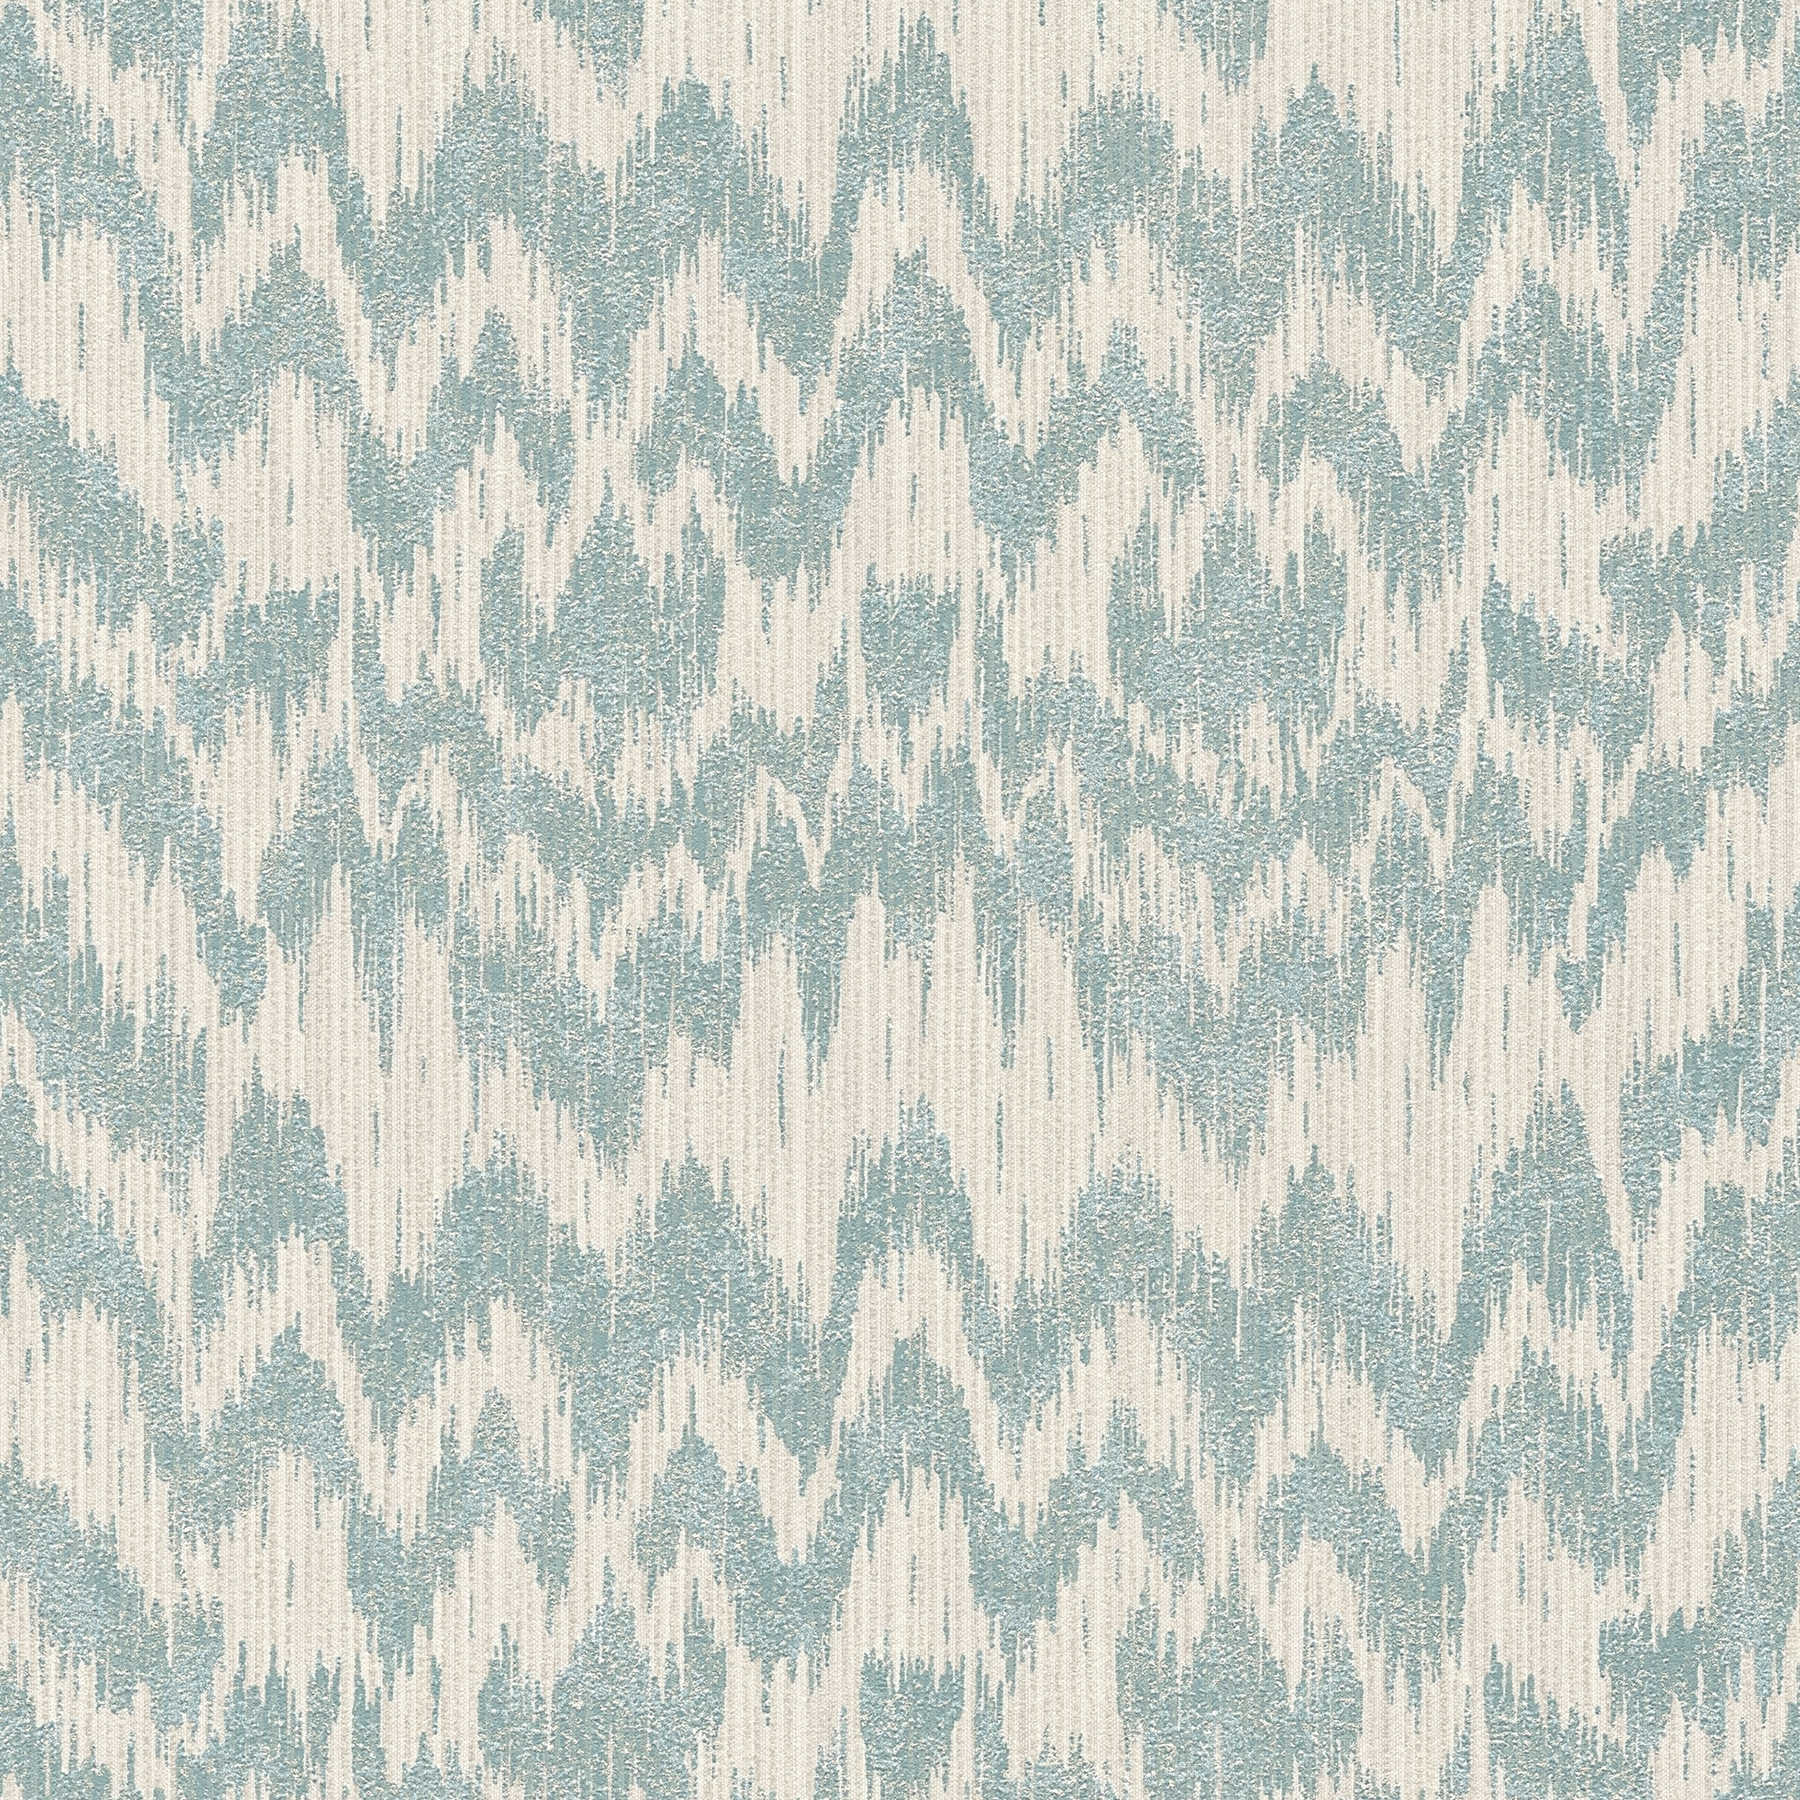 Wallpaper ethnic style with texture & metallic effect - beige, blue
